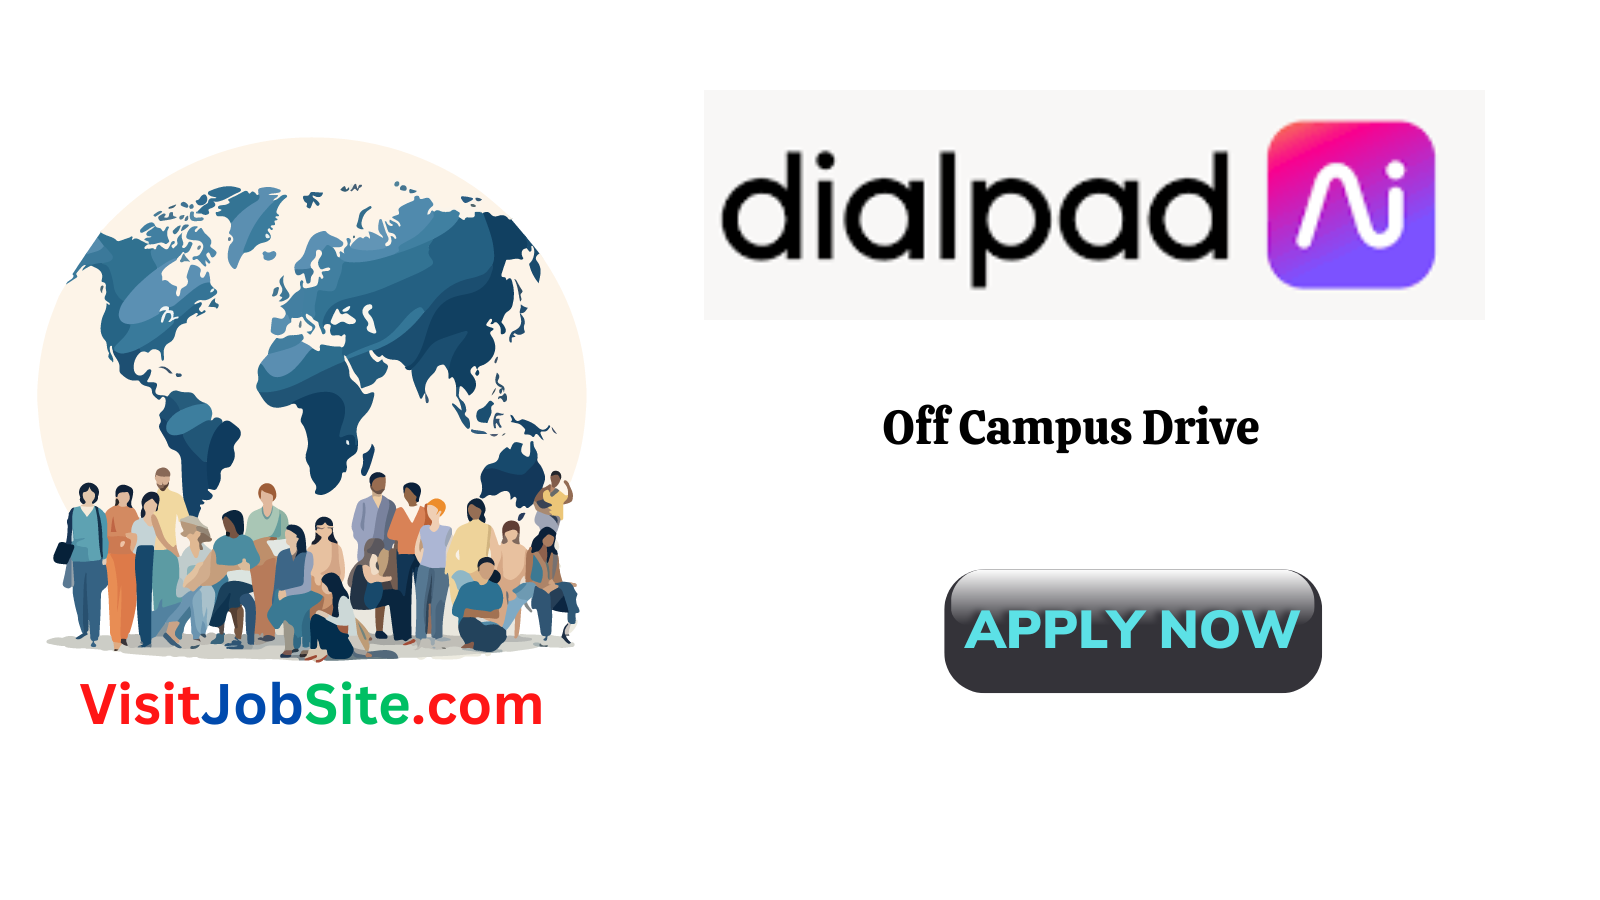 DialPad Off Campus Drive